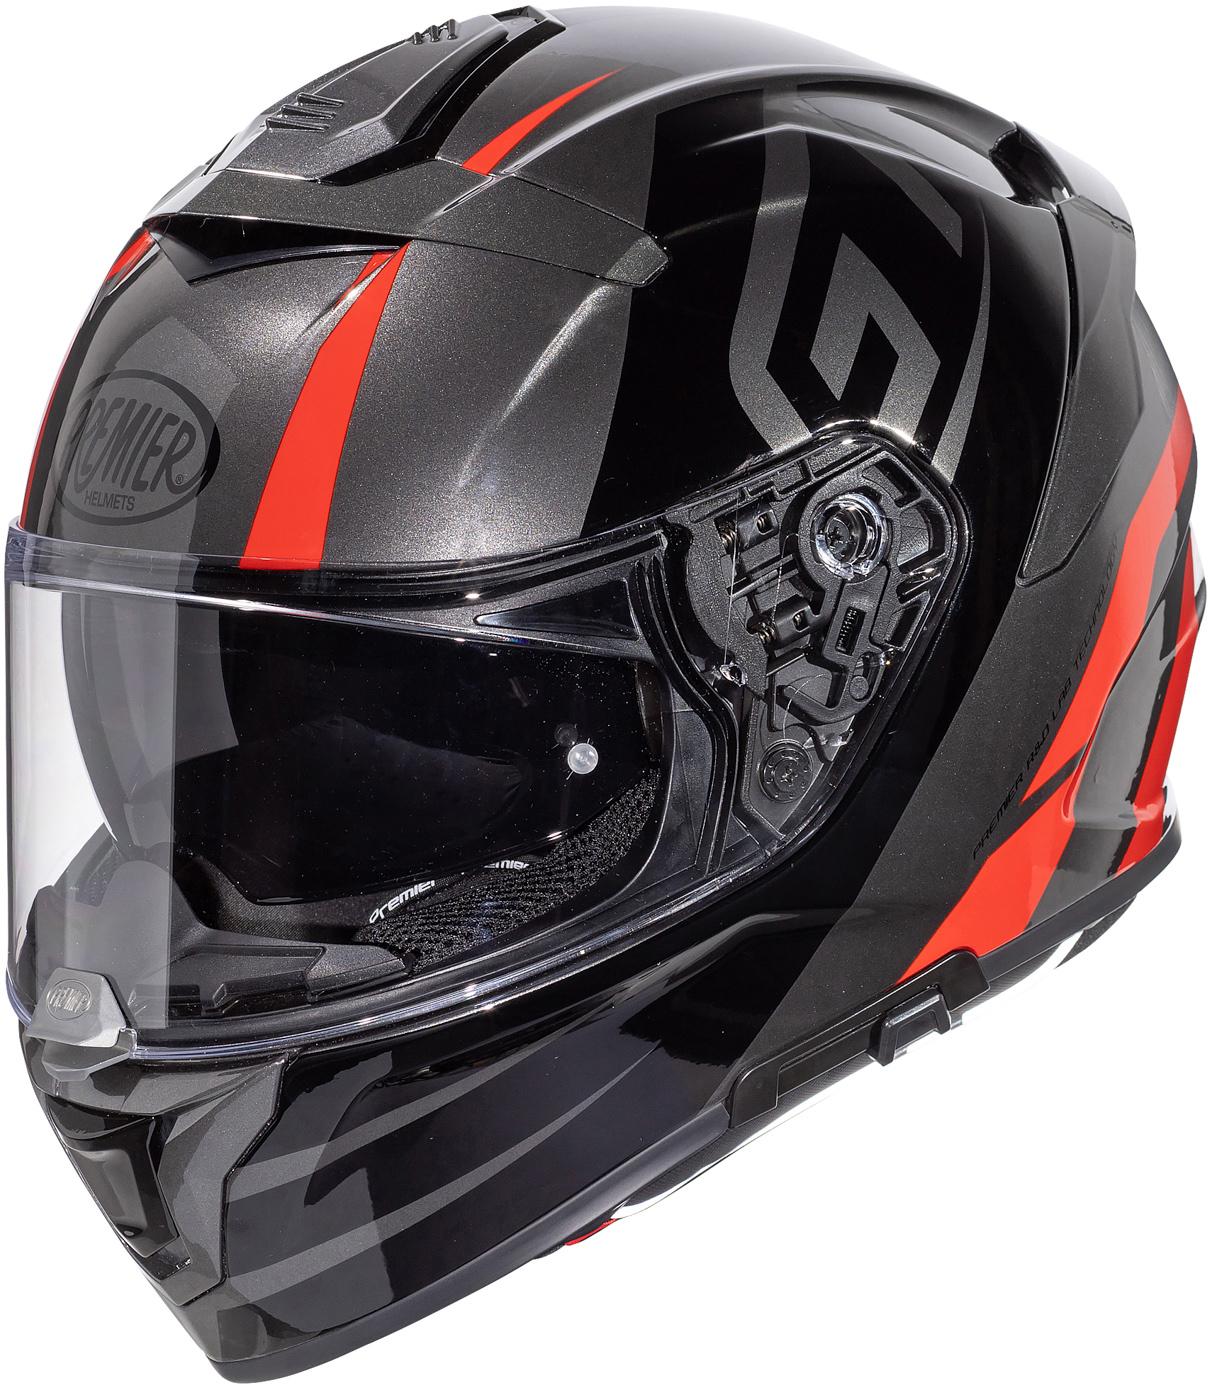 Premier Devil Gt Full Face Motorcycle Helmet - Black/Red, L